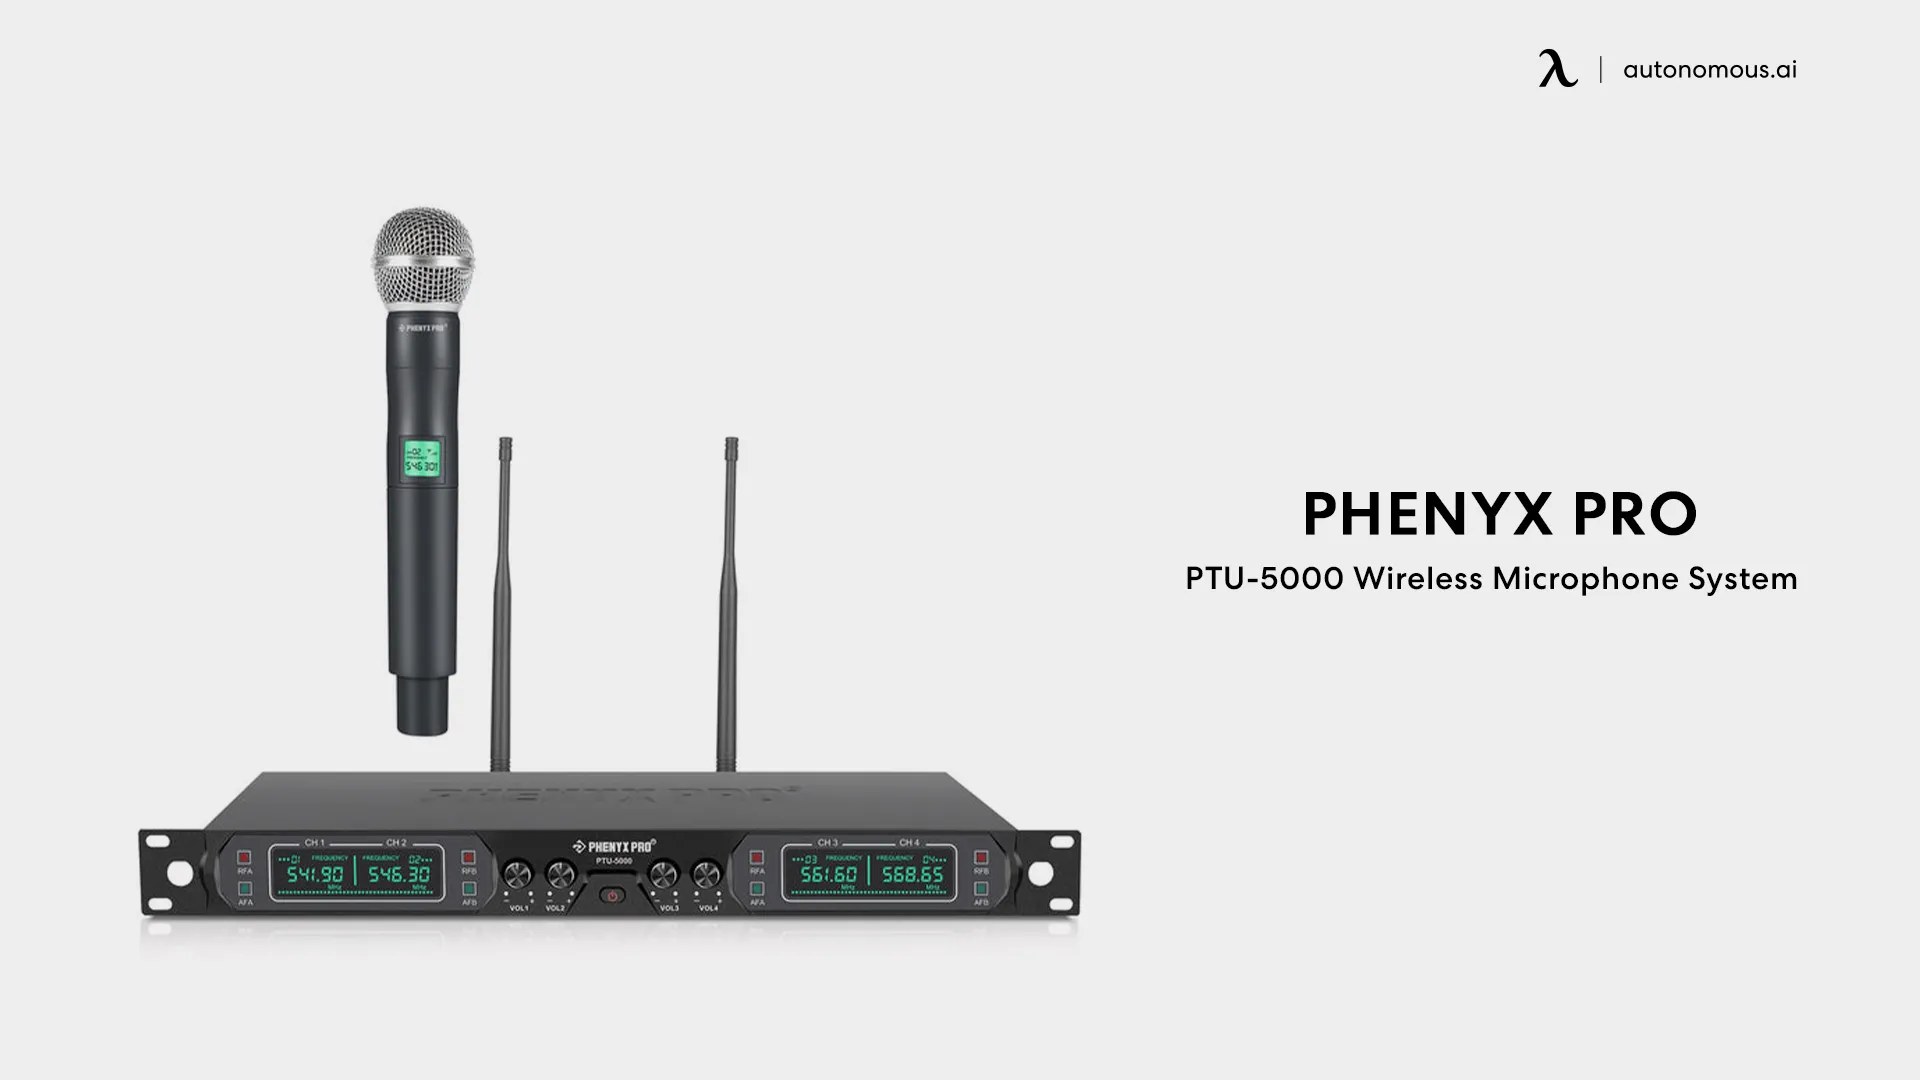 PTU-5000 Wireless Microphone System by Phenyx Pro